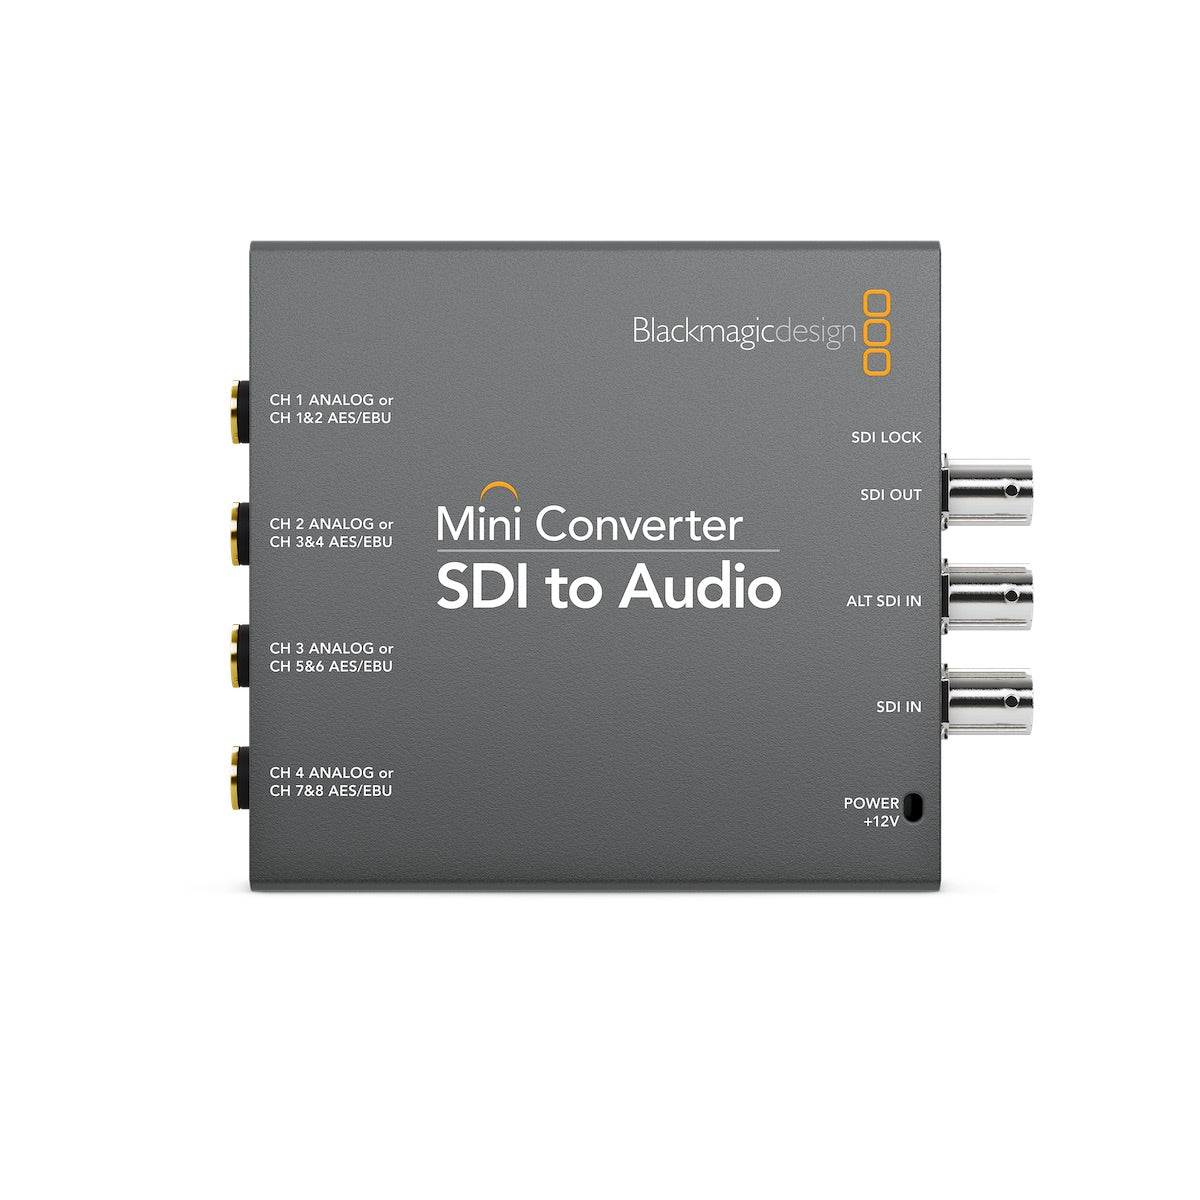 Blackmagic Design Mini Converter SDI to Audio, front